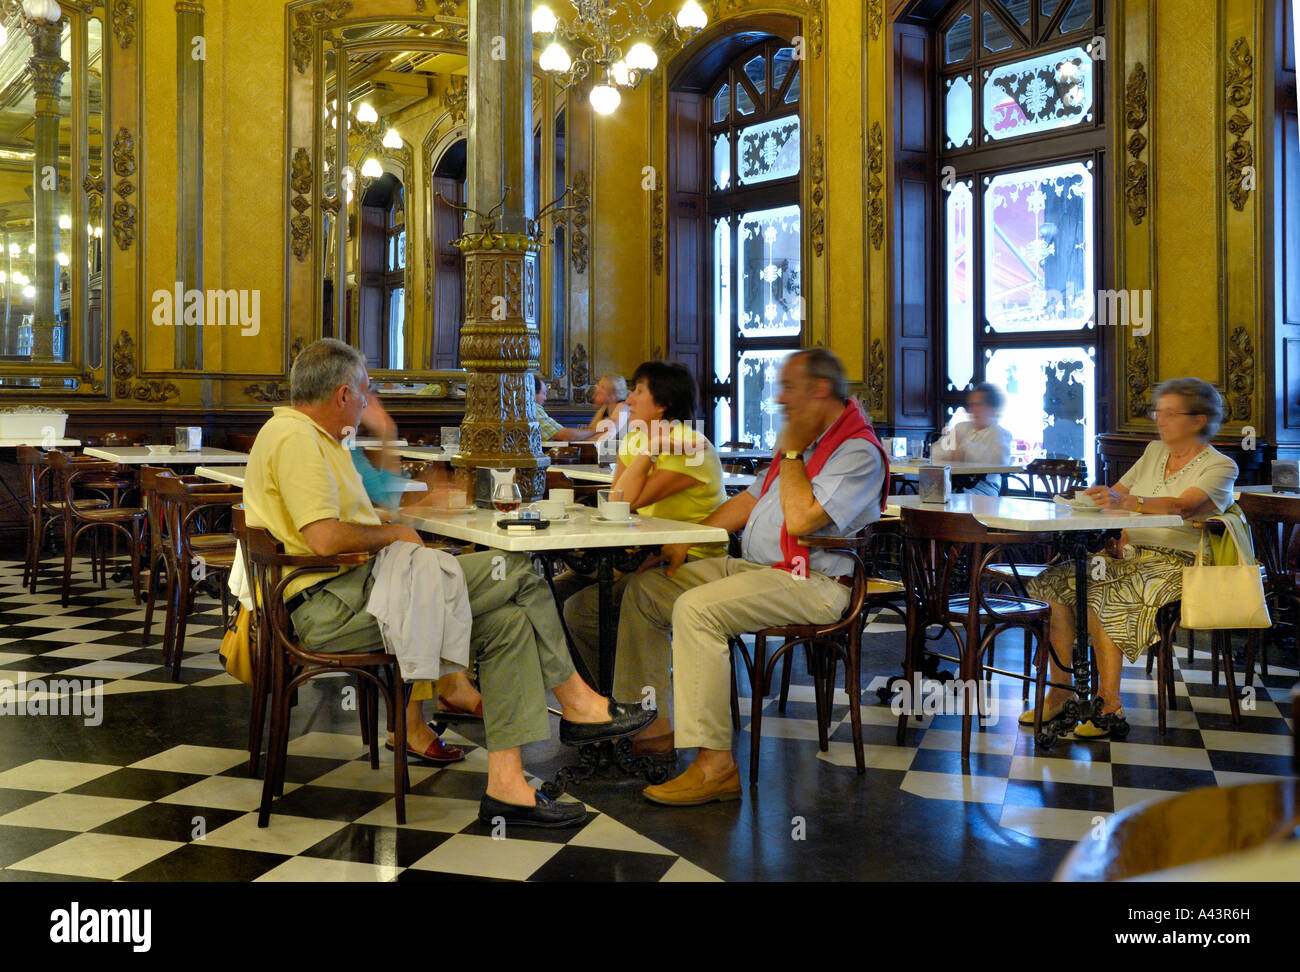 CAFE IRUNA PLAZA DEL CASTILLO PAMPLONA SPAIN Stock Photo - Alamy